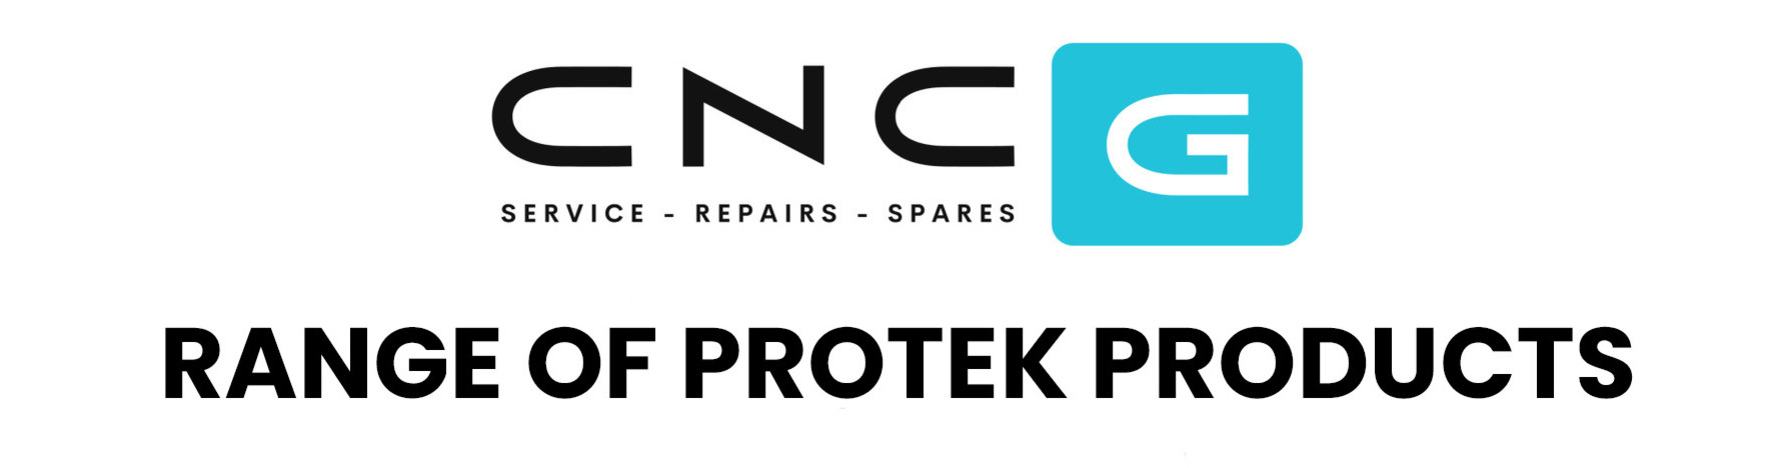 Protek Machinery - Cutting & Milling